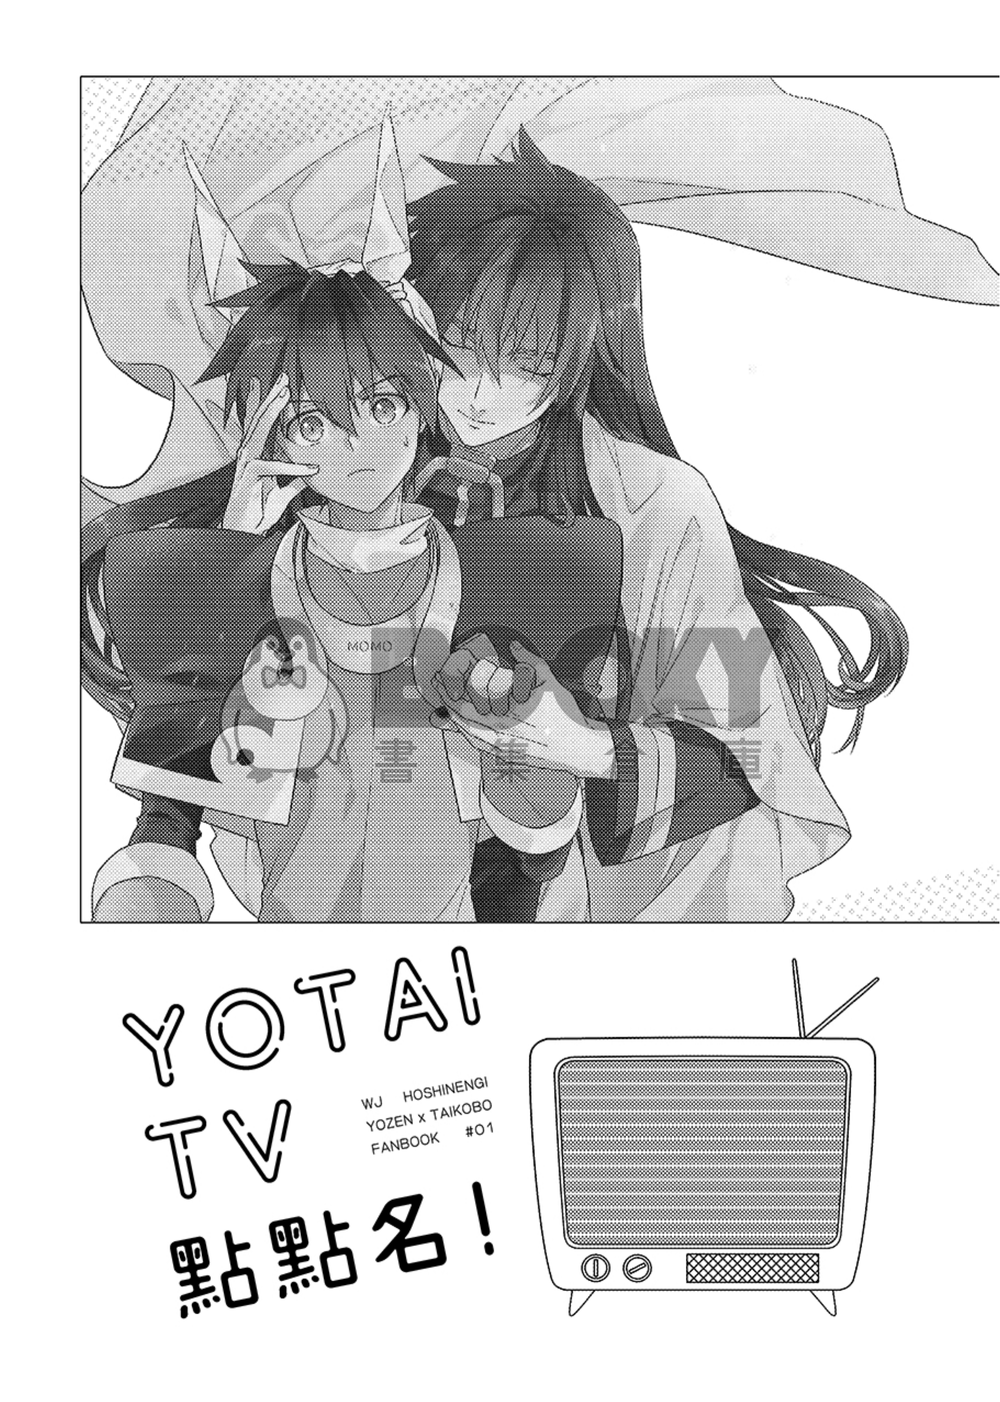 YOTAI TV點點名 試閱圖片